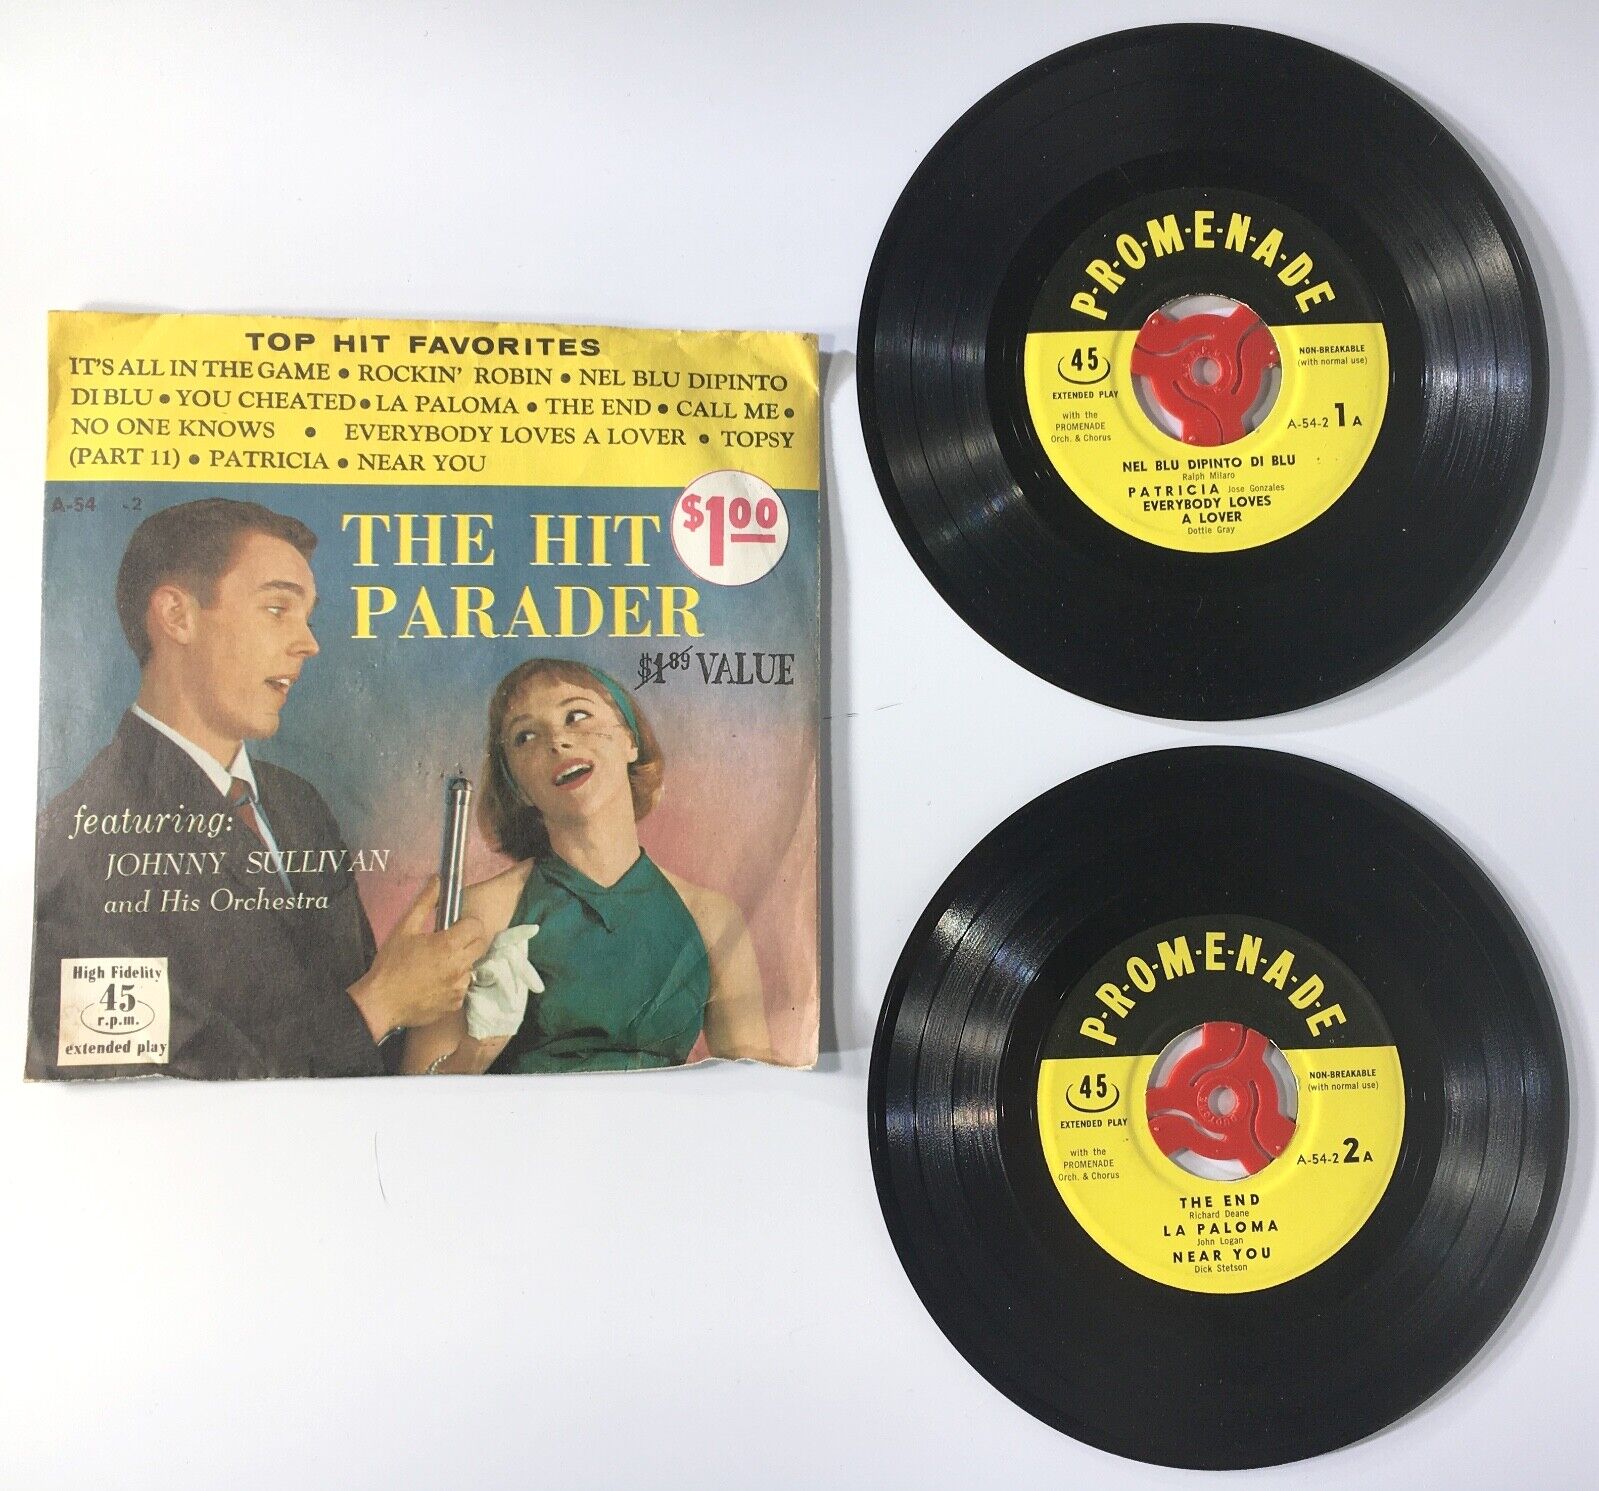 1958 THE HIT PARADER Top Hit Favorites 2 x 45 Vinyl Record Set Johnny Sullivan